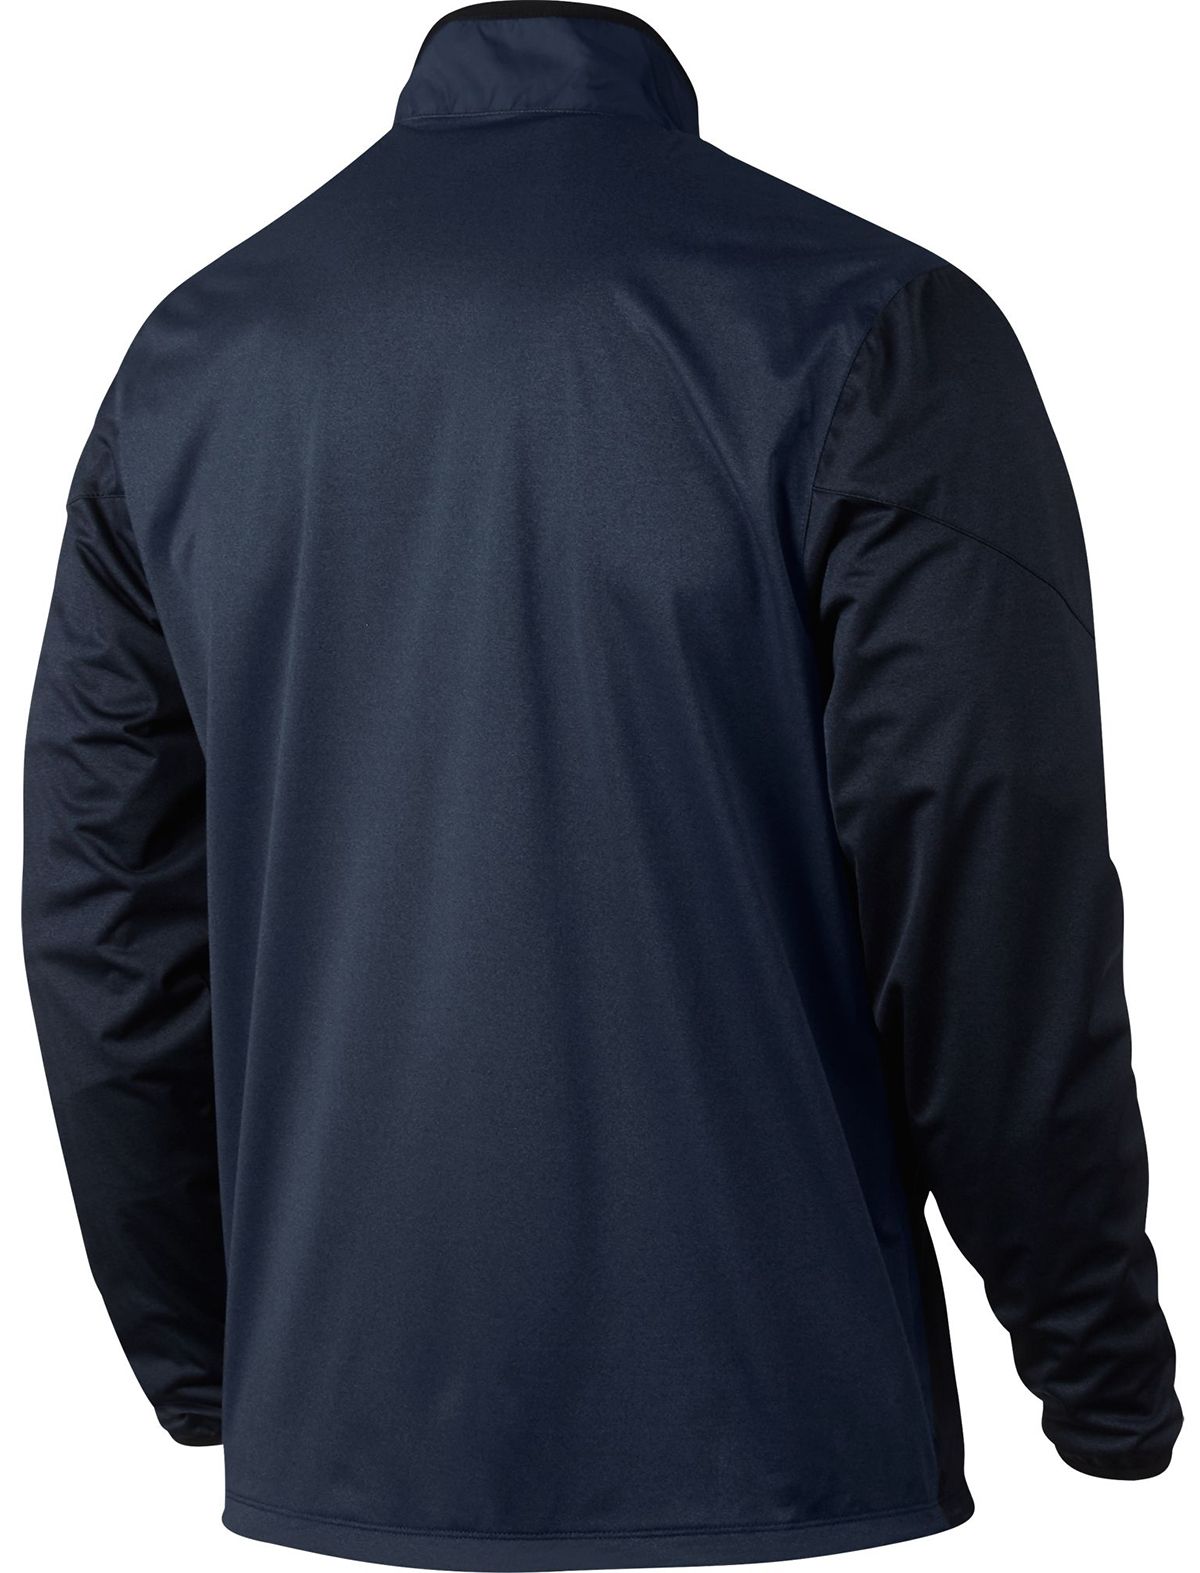 Nike Golf Full-Zip Shield Jacket 726401